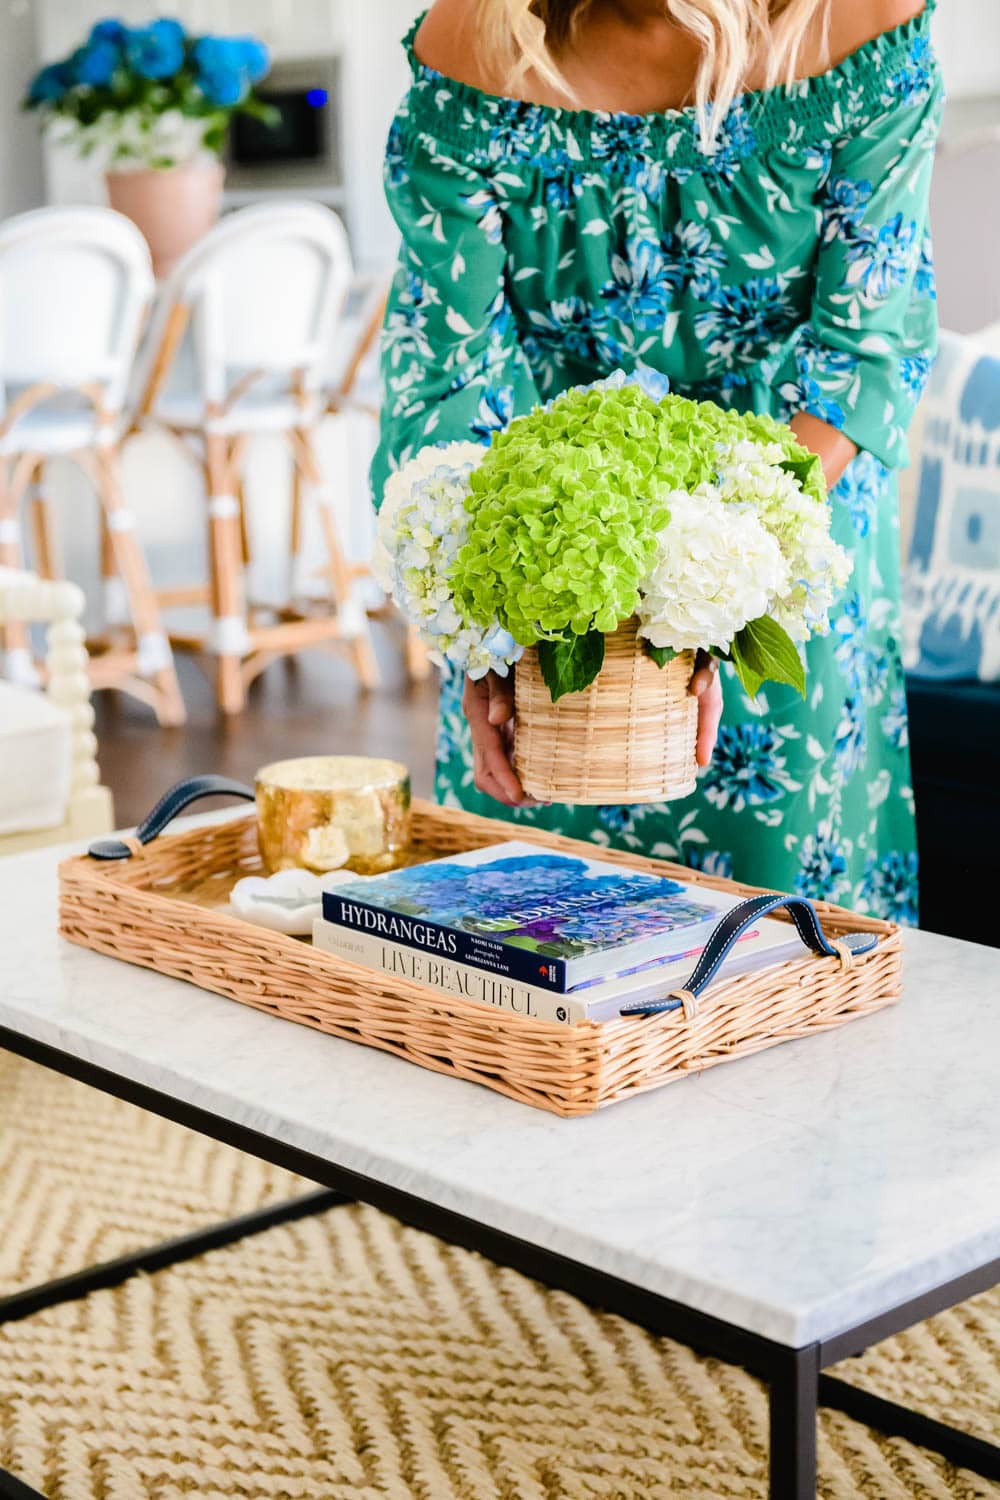 Summer fresh hues in this summer decor for a seasonal update. Fresh flowers, blue & white, green decor. #ABlissfulNest #summerdecor #summerhometour #livingroom